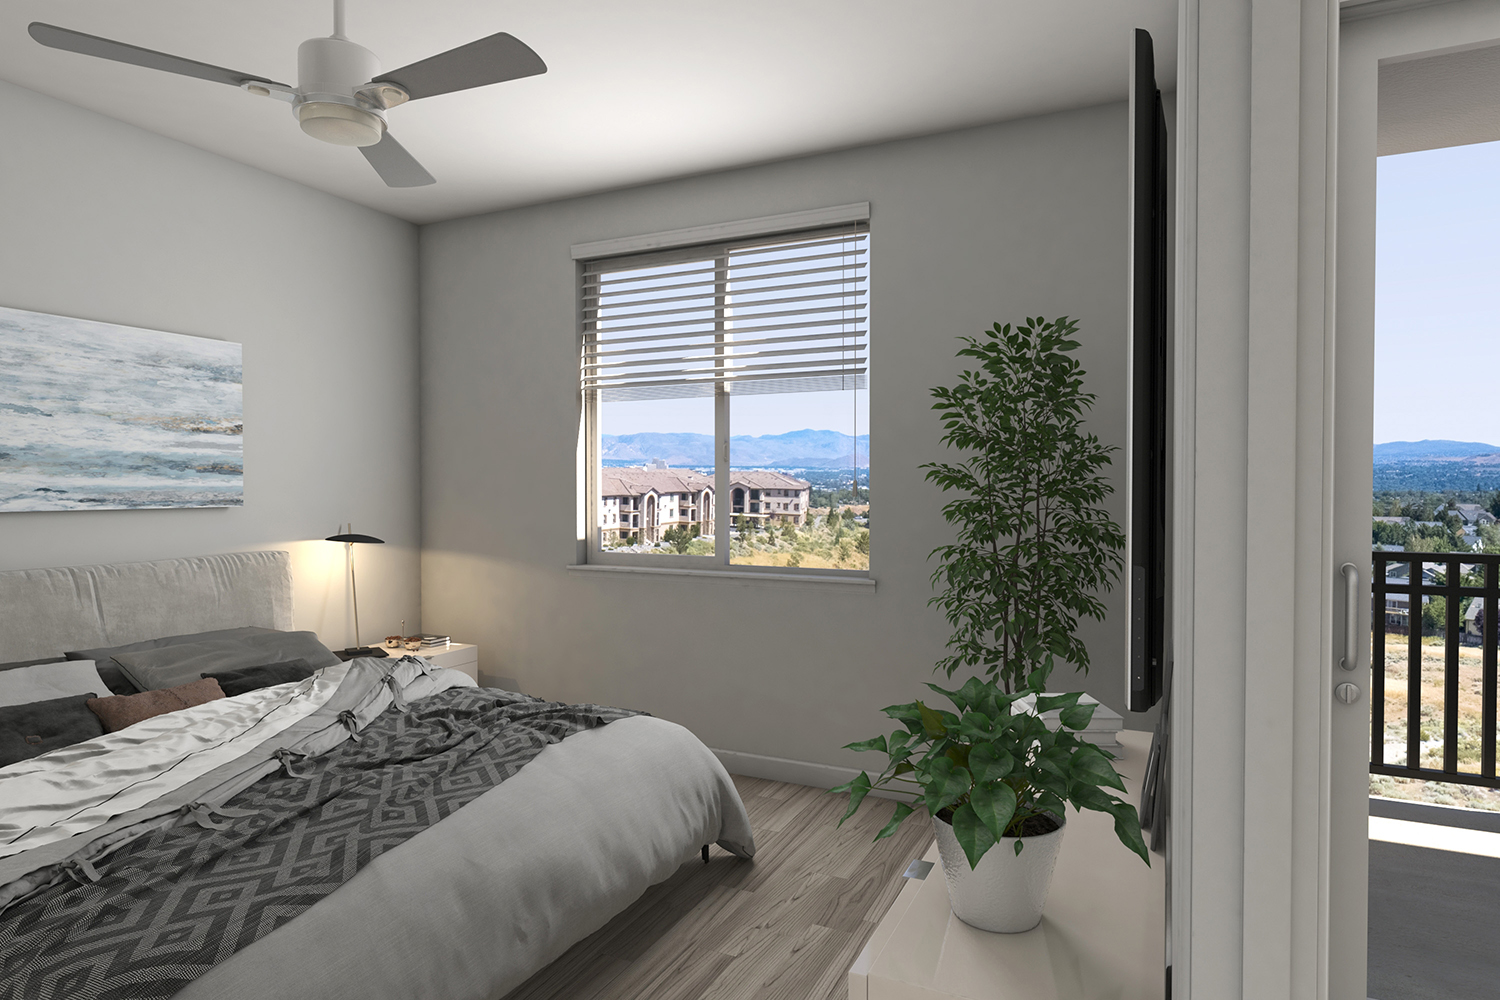 The Overlook at Keystone Canyon Apartments - Reno NV - Three Bedroom - Master Bedroom & Window